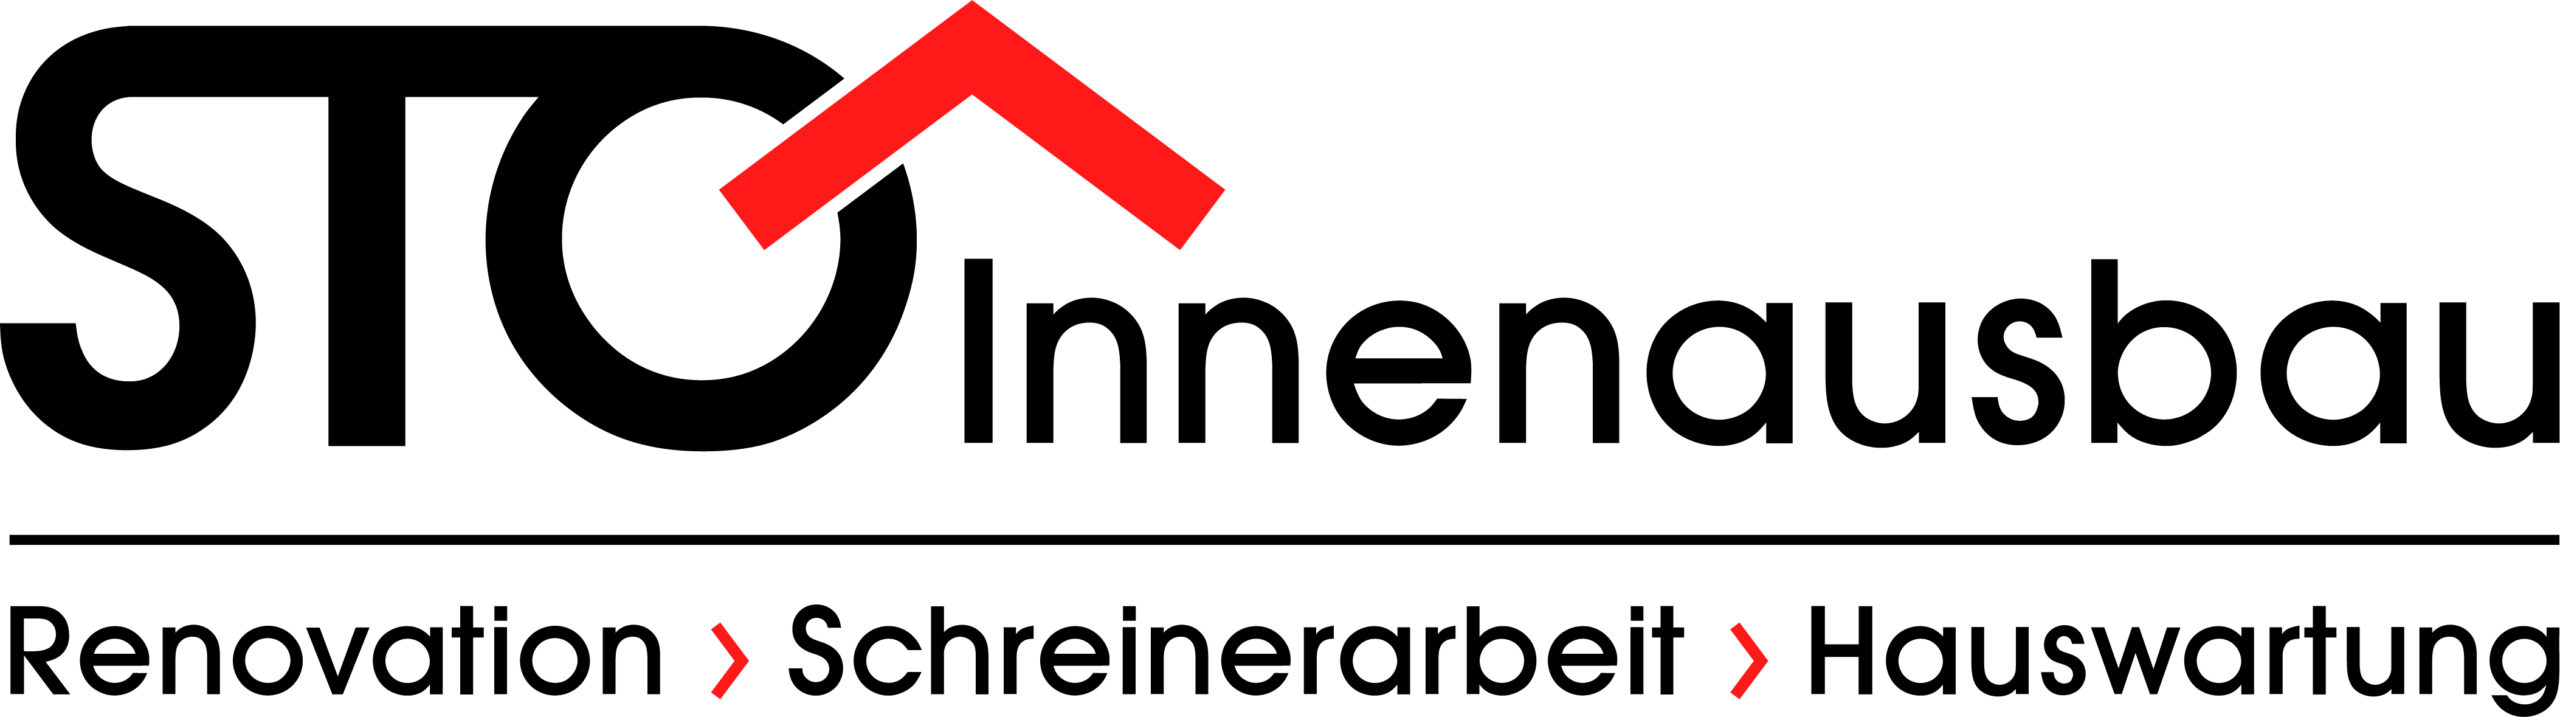 STO Innenausbau GmbH